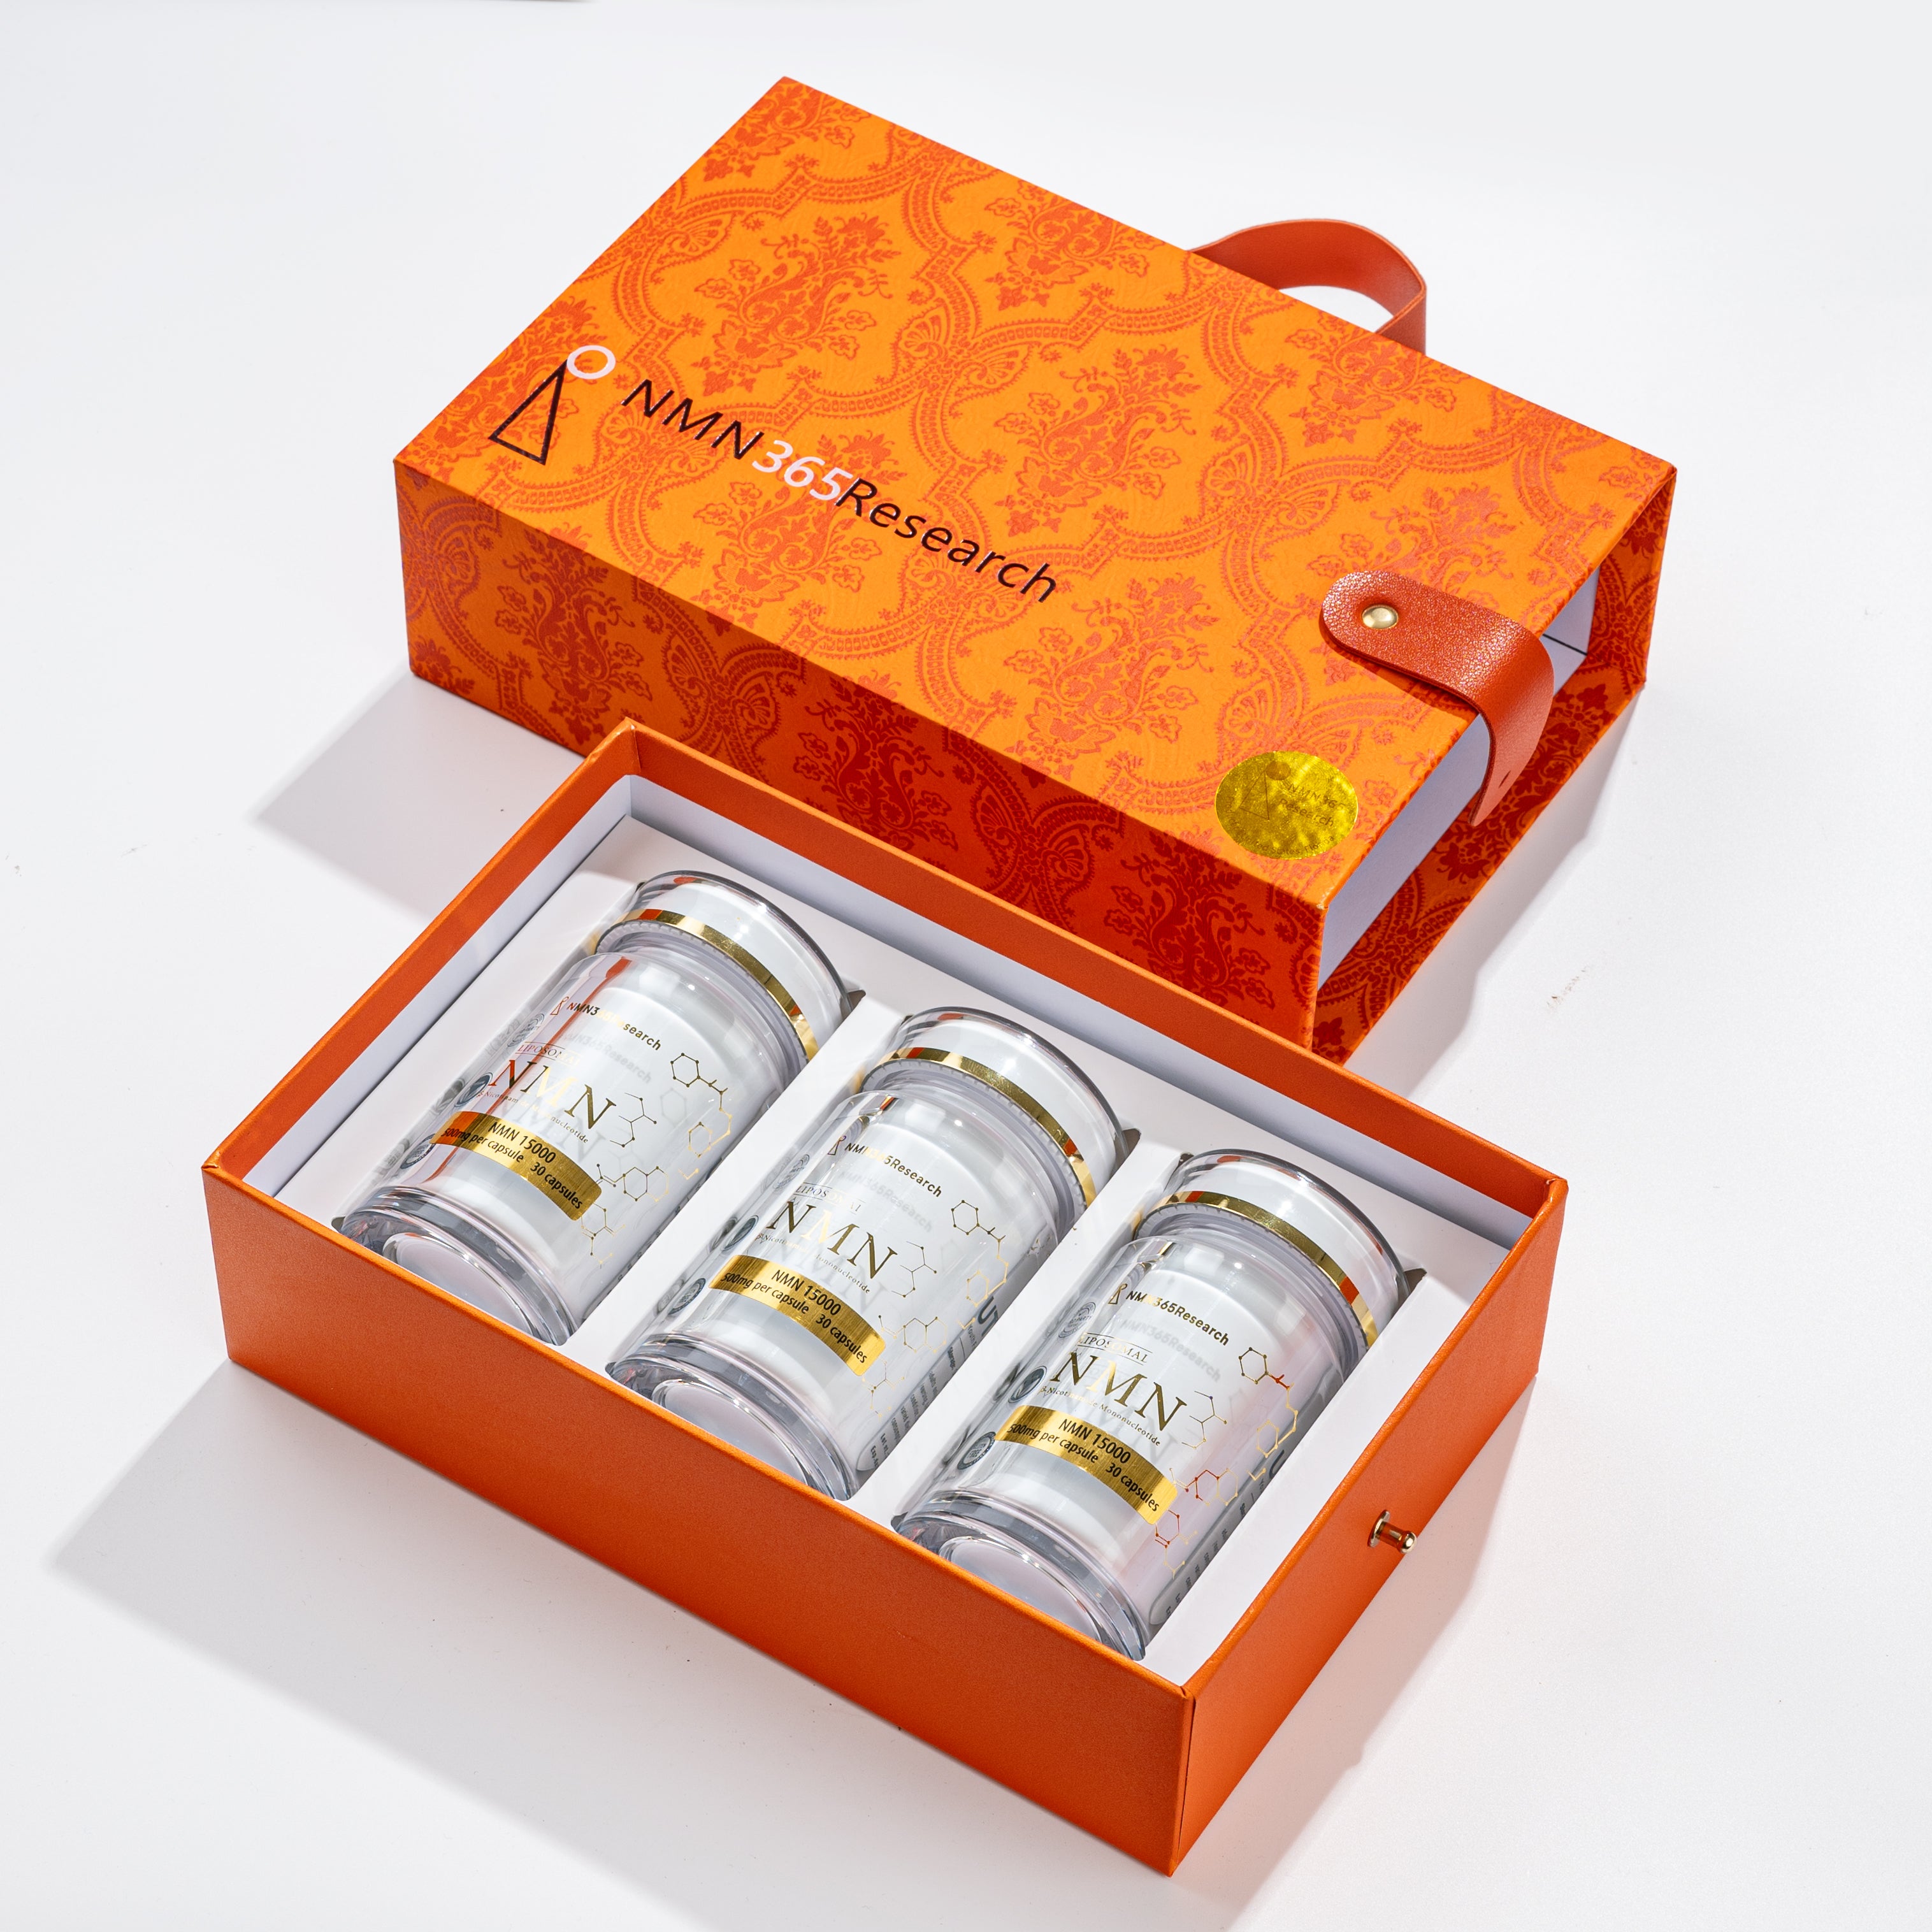 NMN365Research USA 45000 Orange Box (Gift Pack 15000 x 3 bottles)